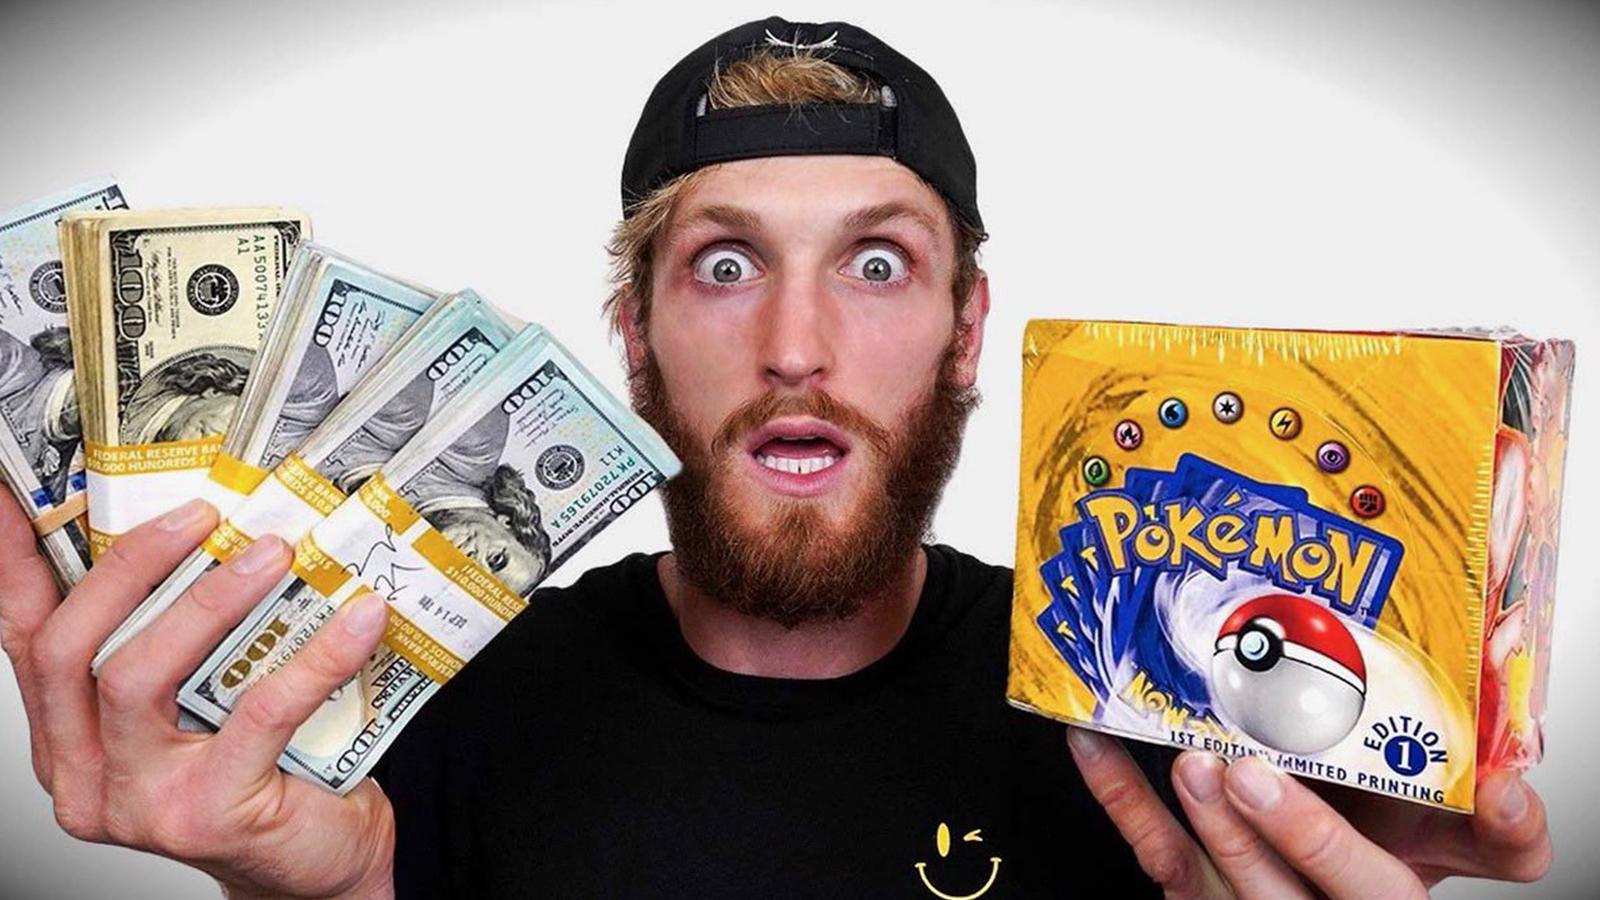 Logan Paul holding Pokemon cards and money